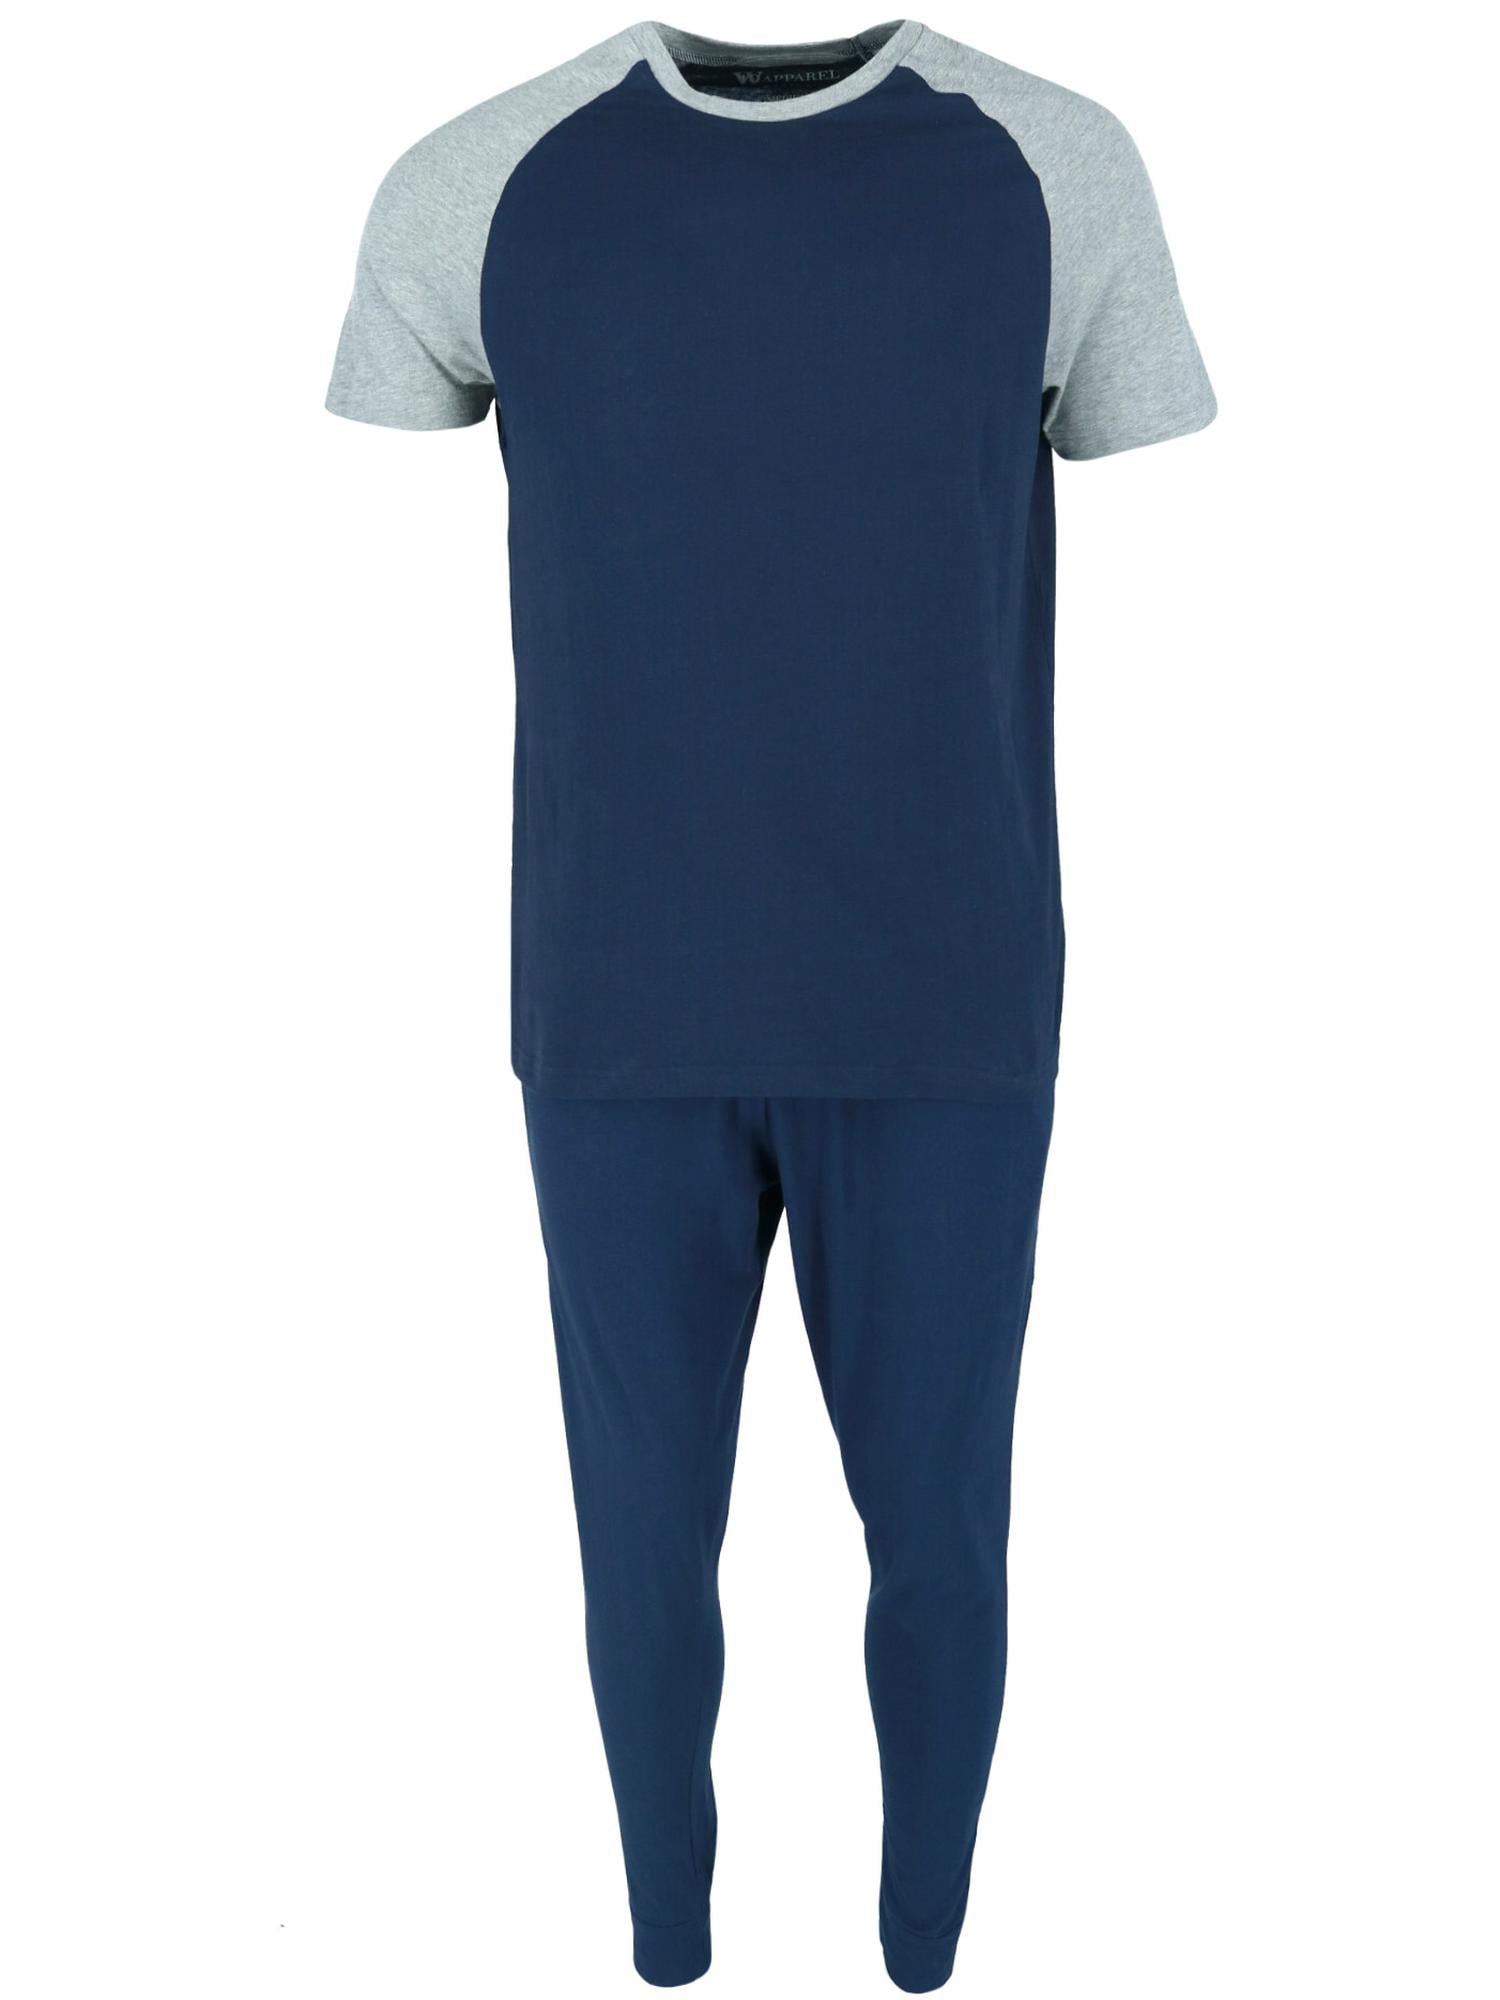 TEN WEST Apparel Mens Cotton Yarn Dyed Short Sleeve Short Leg Printed Pajamas Set